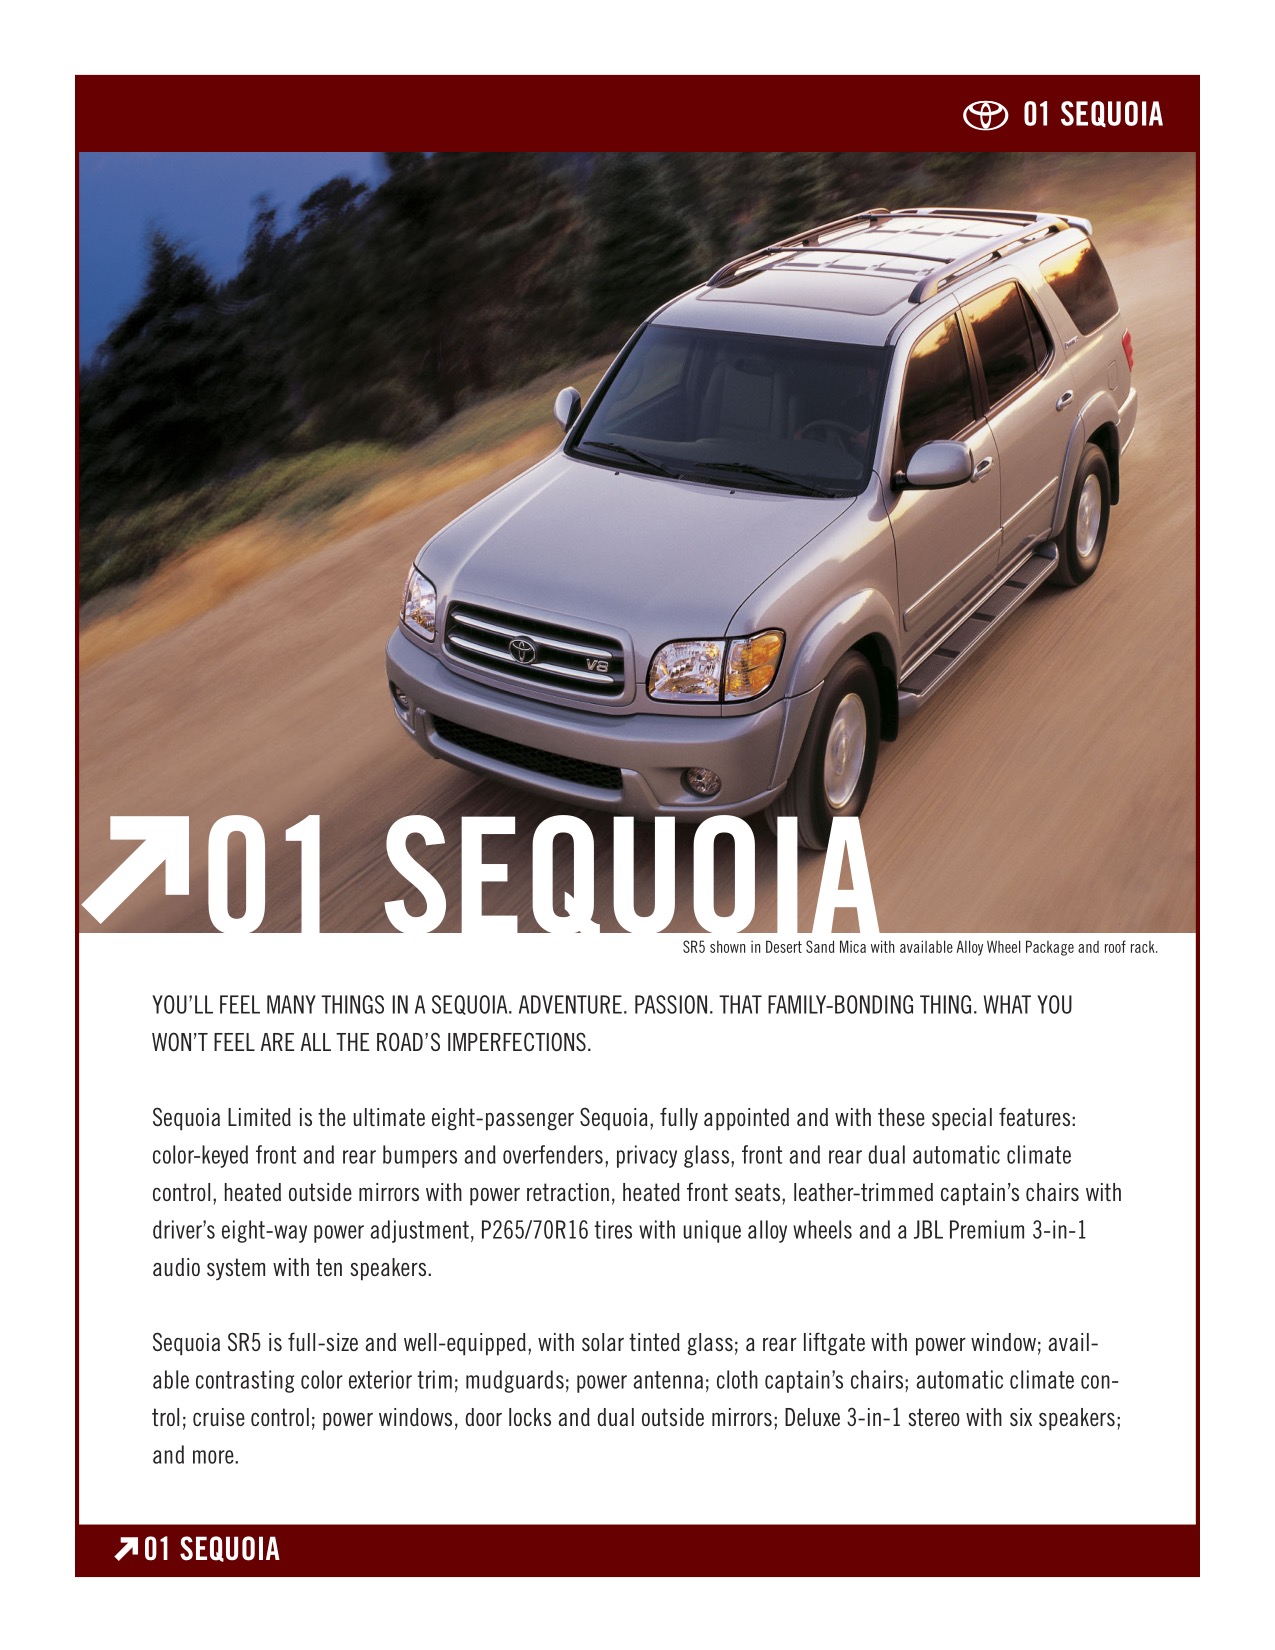 2001 Toyota Sequoia Brochure